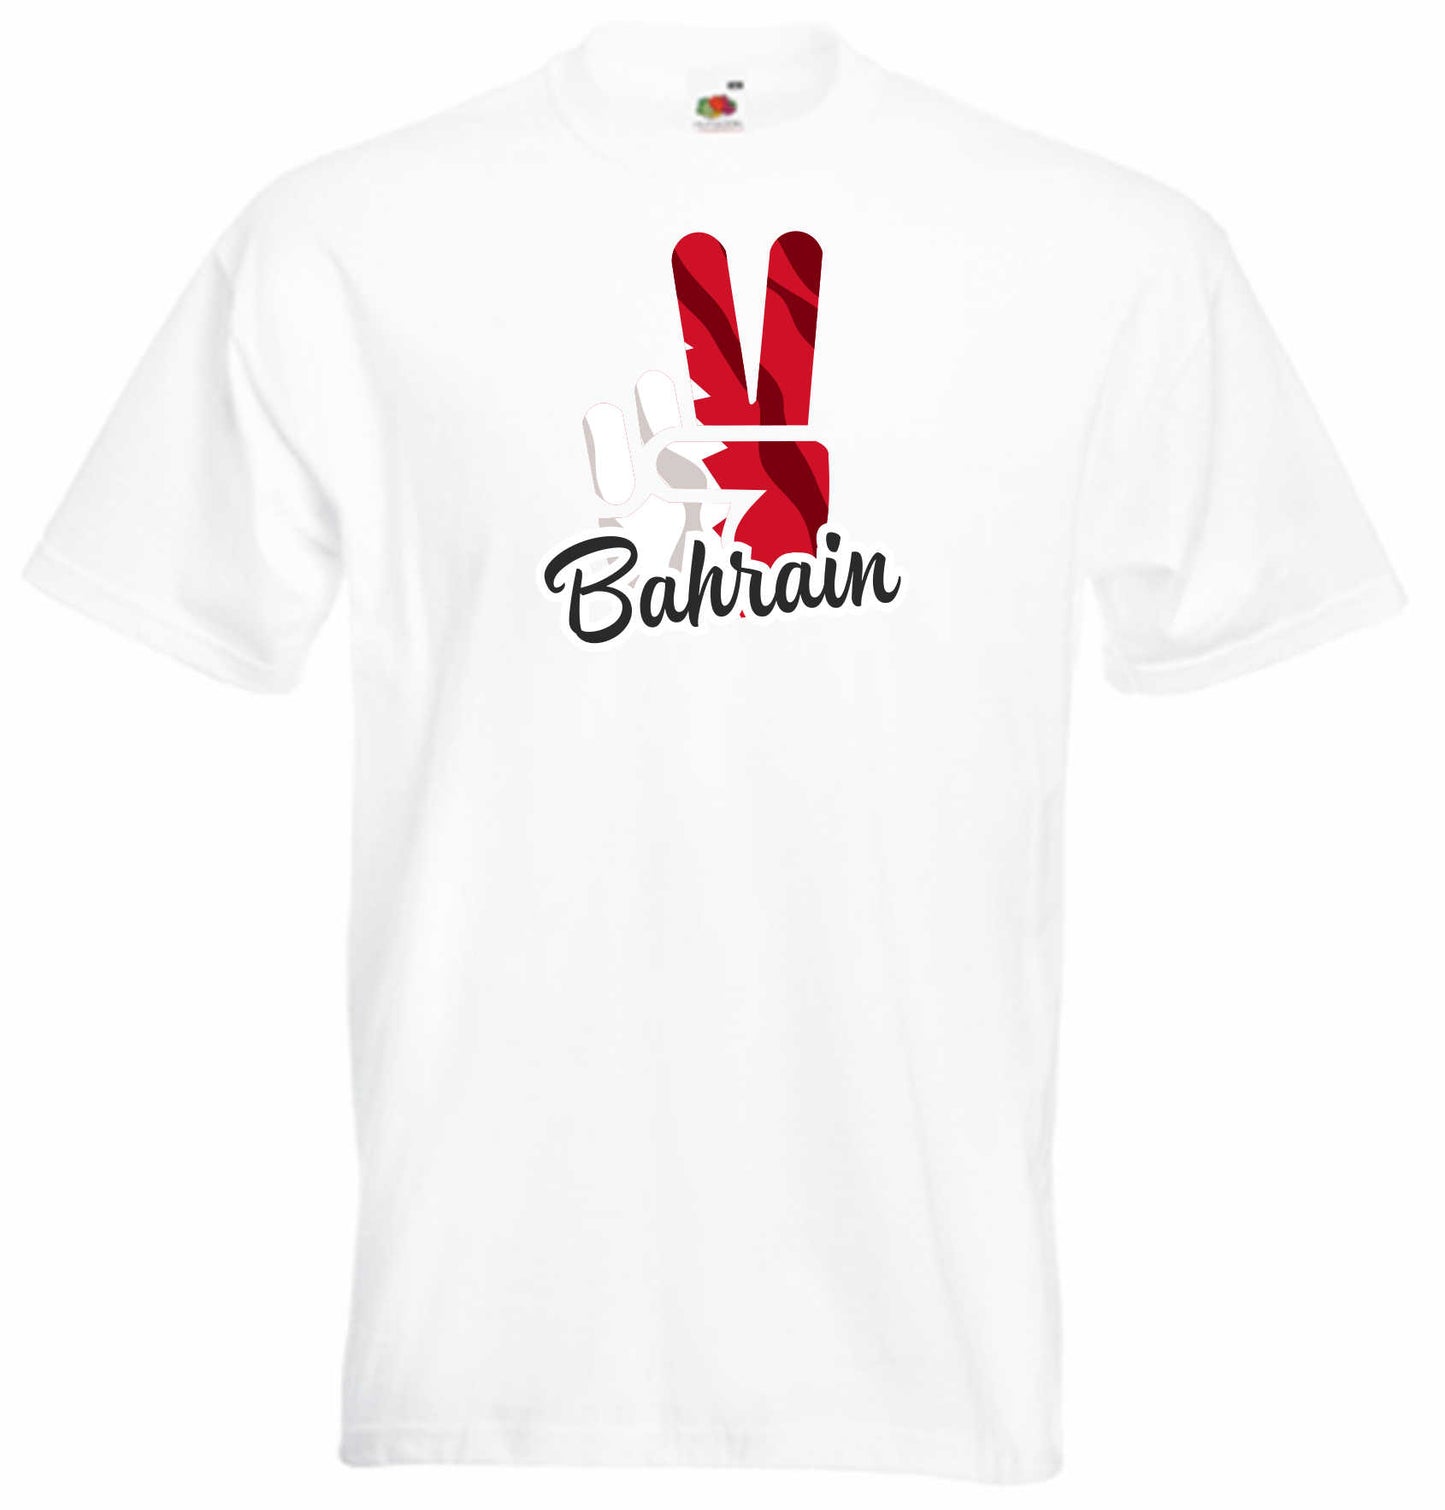 T-Shirt Herren - Victory - Flagge / Fahne - Bahrain - Sieg